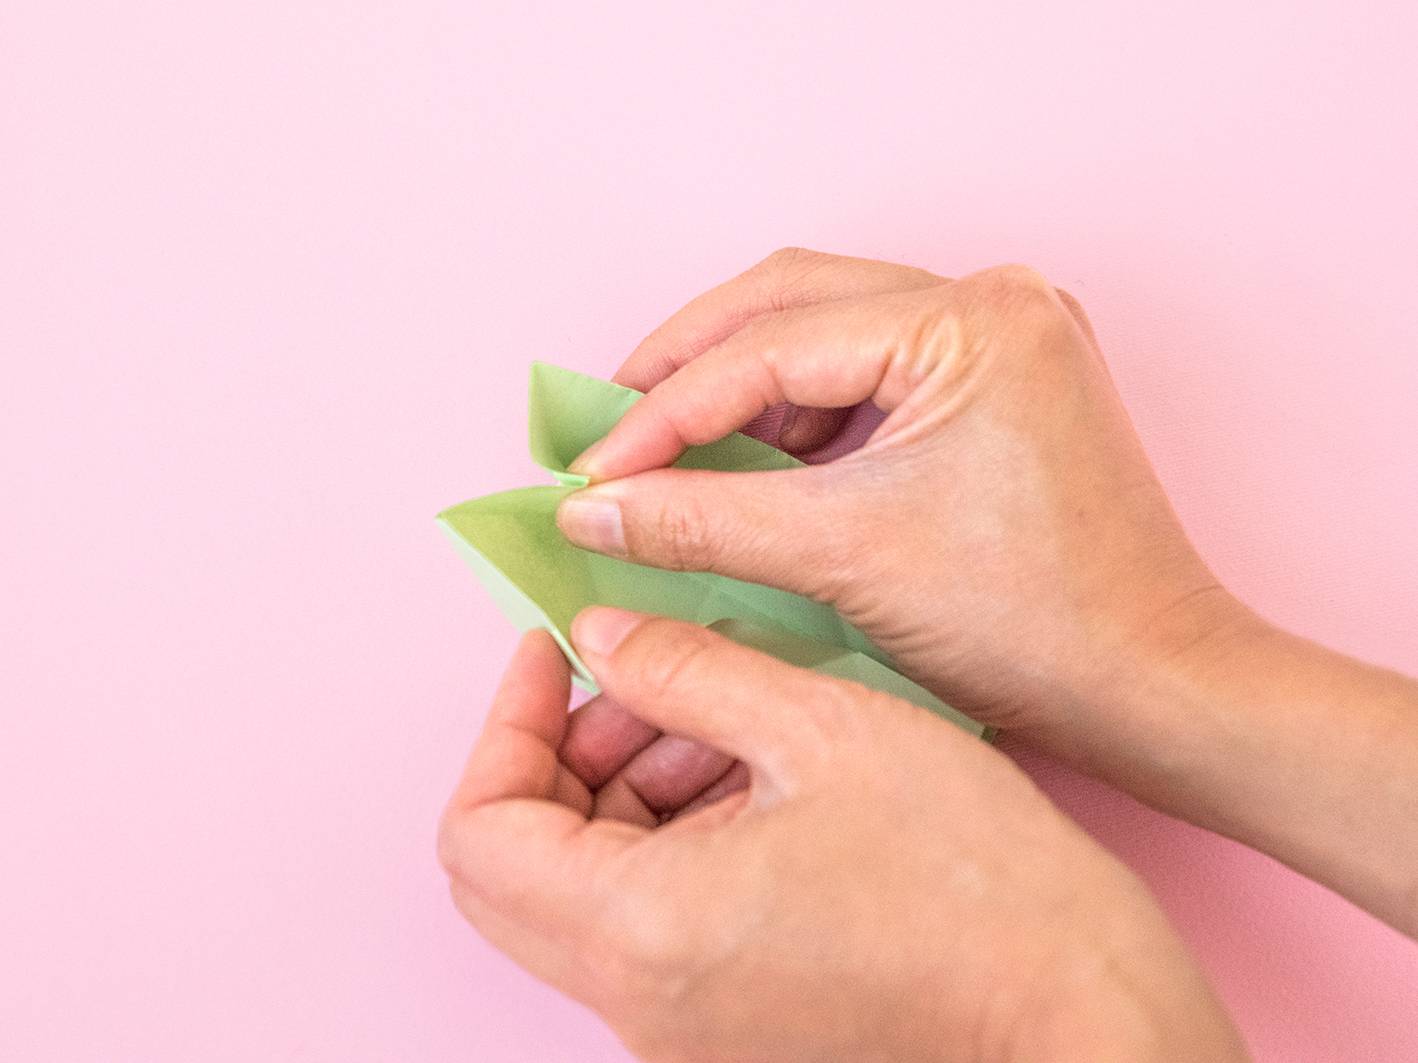 Step 2 - Easy DIY origami wall art in under half an hour!